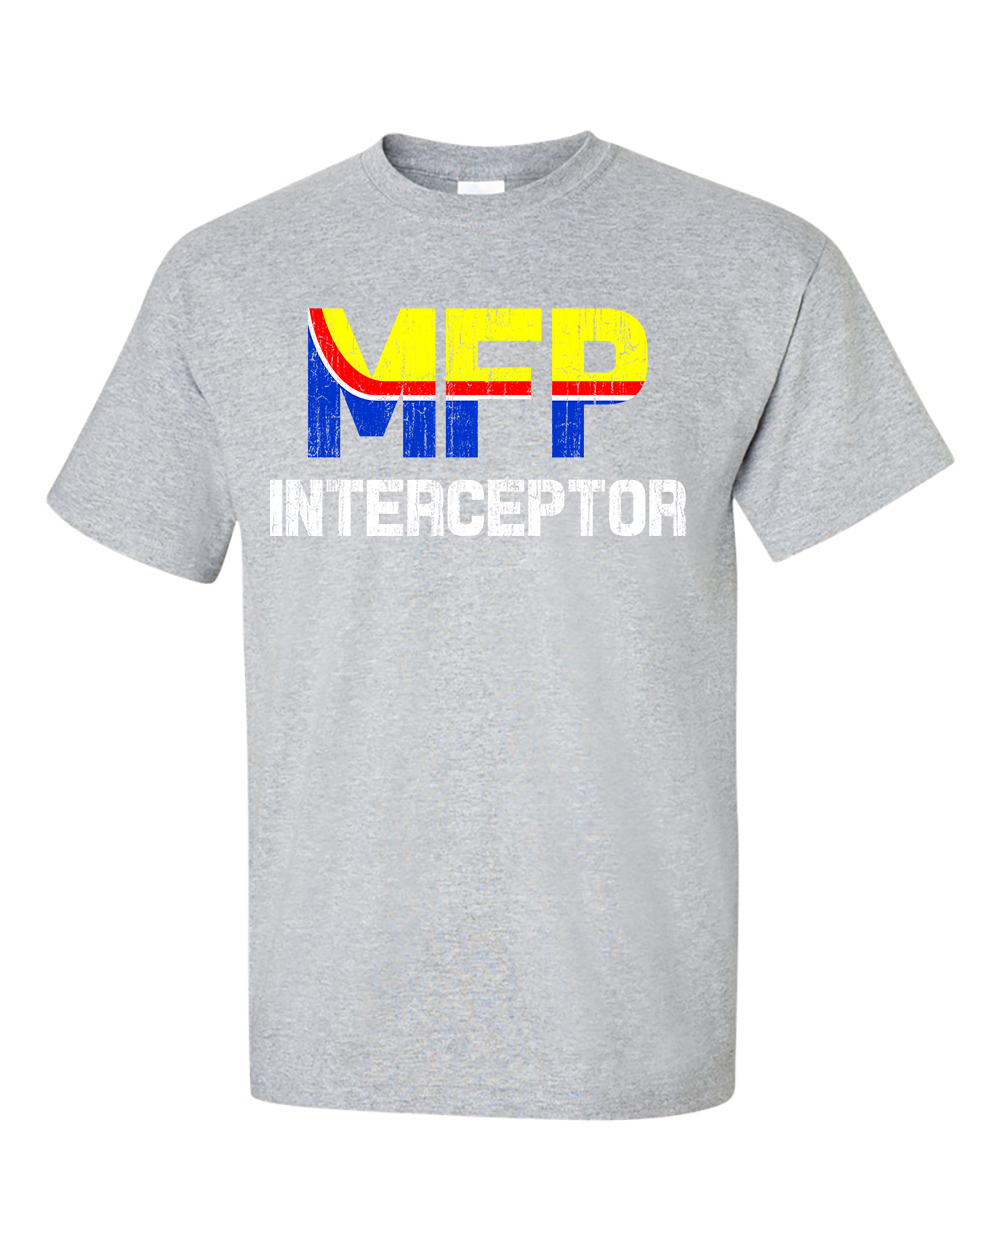 Mad Max Inspired MFP Interceptor Main Force Patrol Retro Movie V8 Car T-Shirt